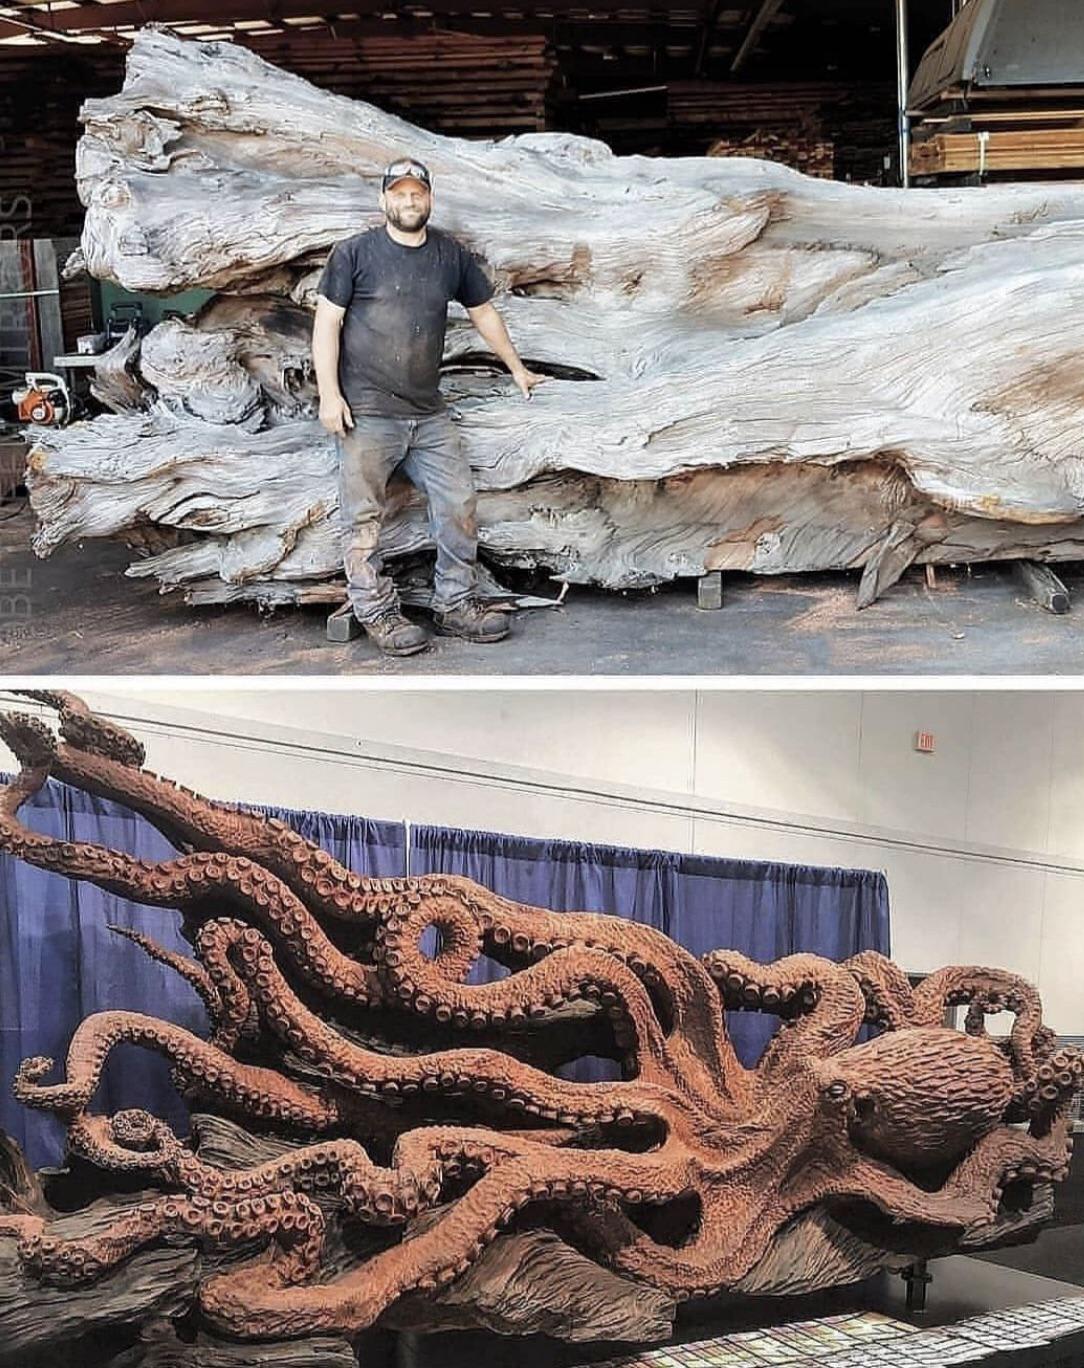 This crazy wood sculpture